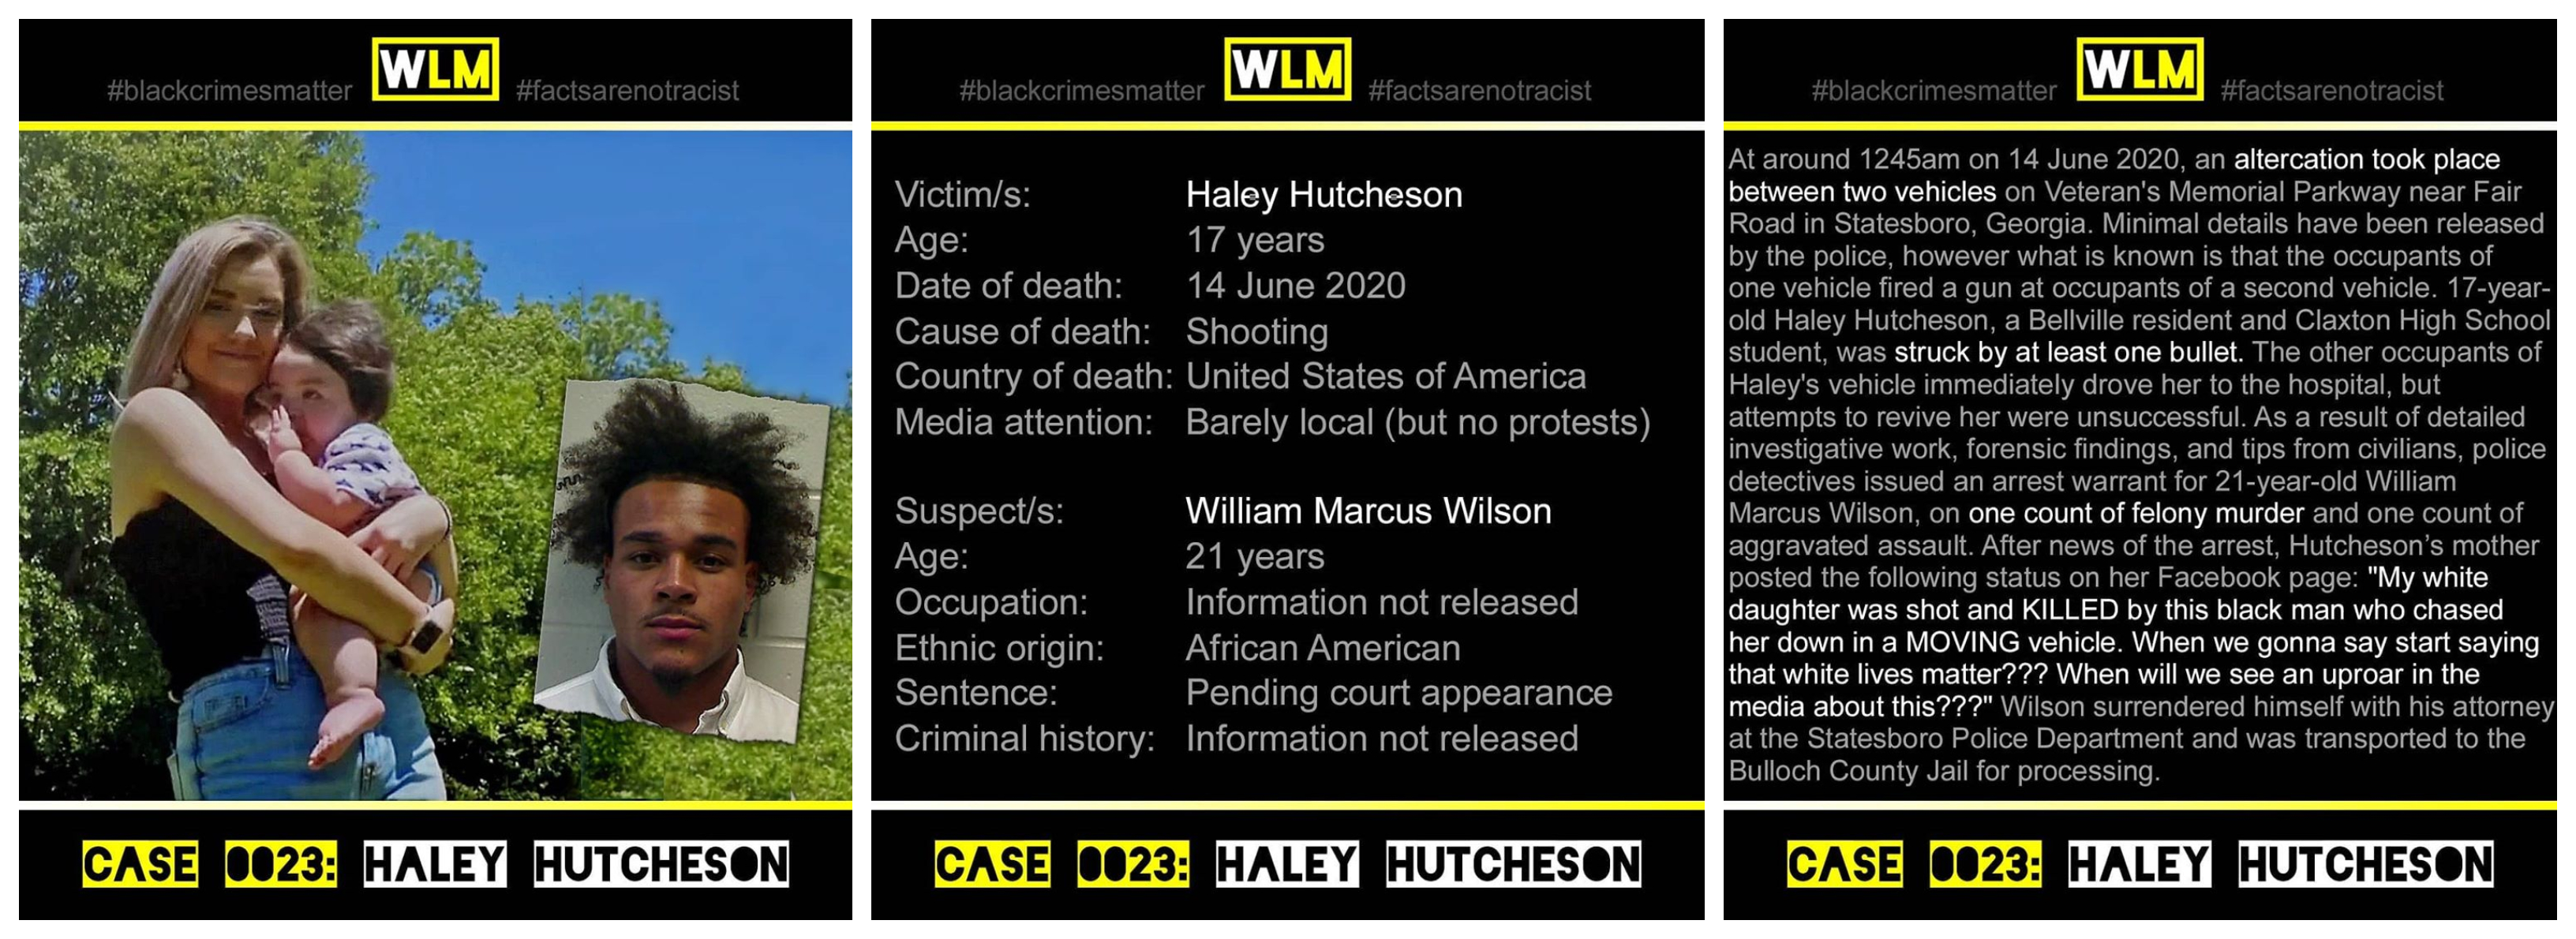 case-023-haley-hutcheson